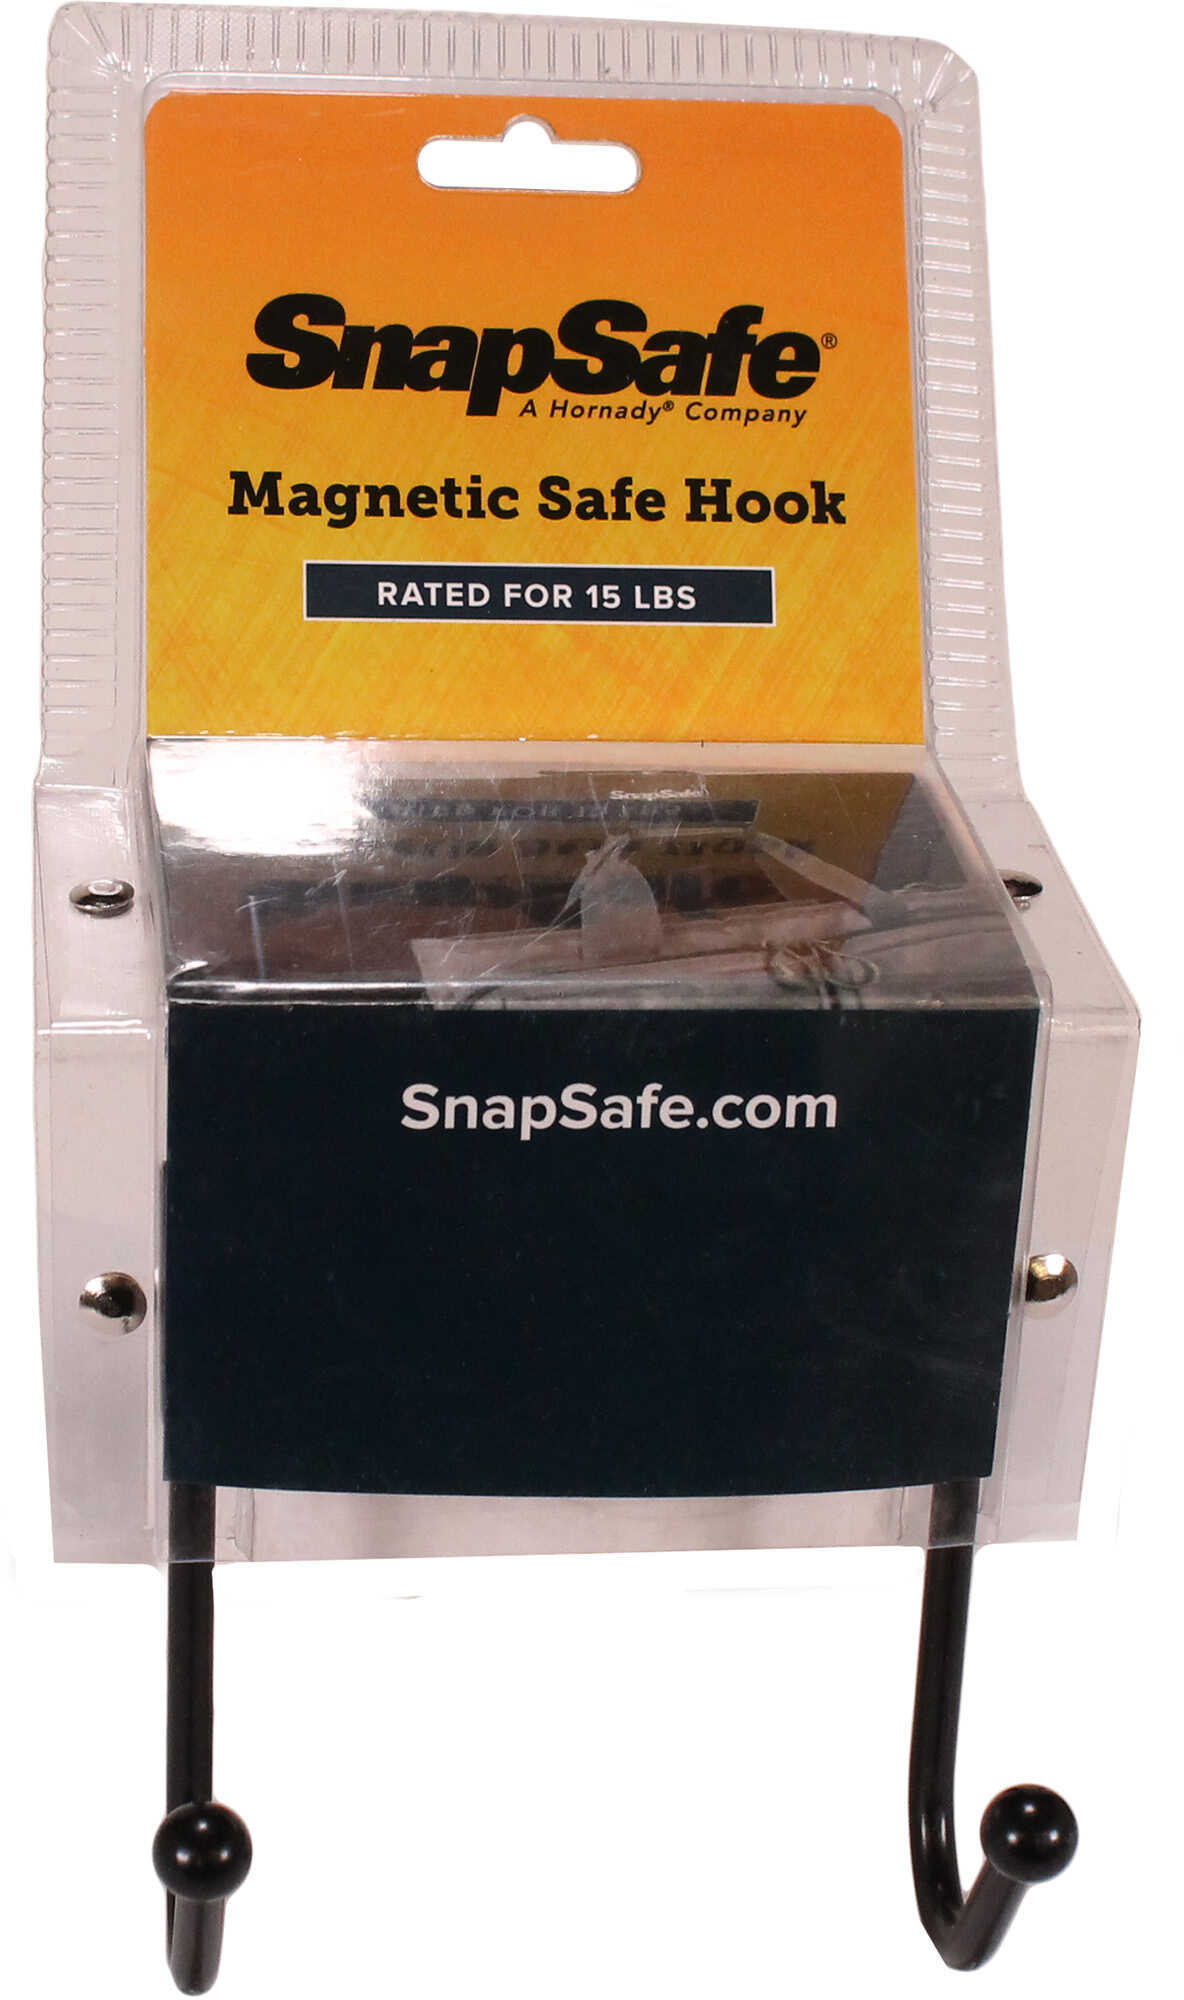 Hornady SNAPSafe Magnetic Safe Hook